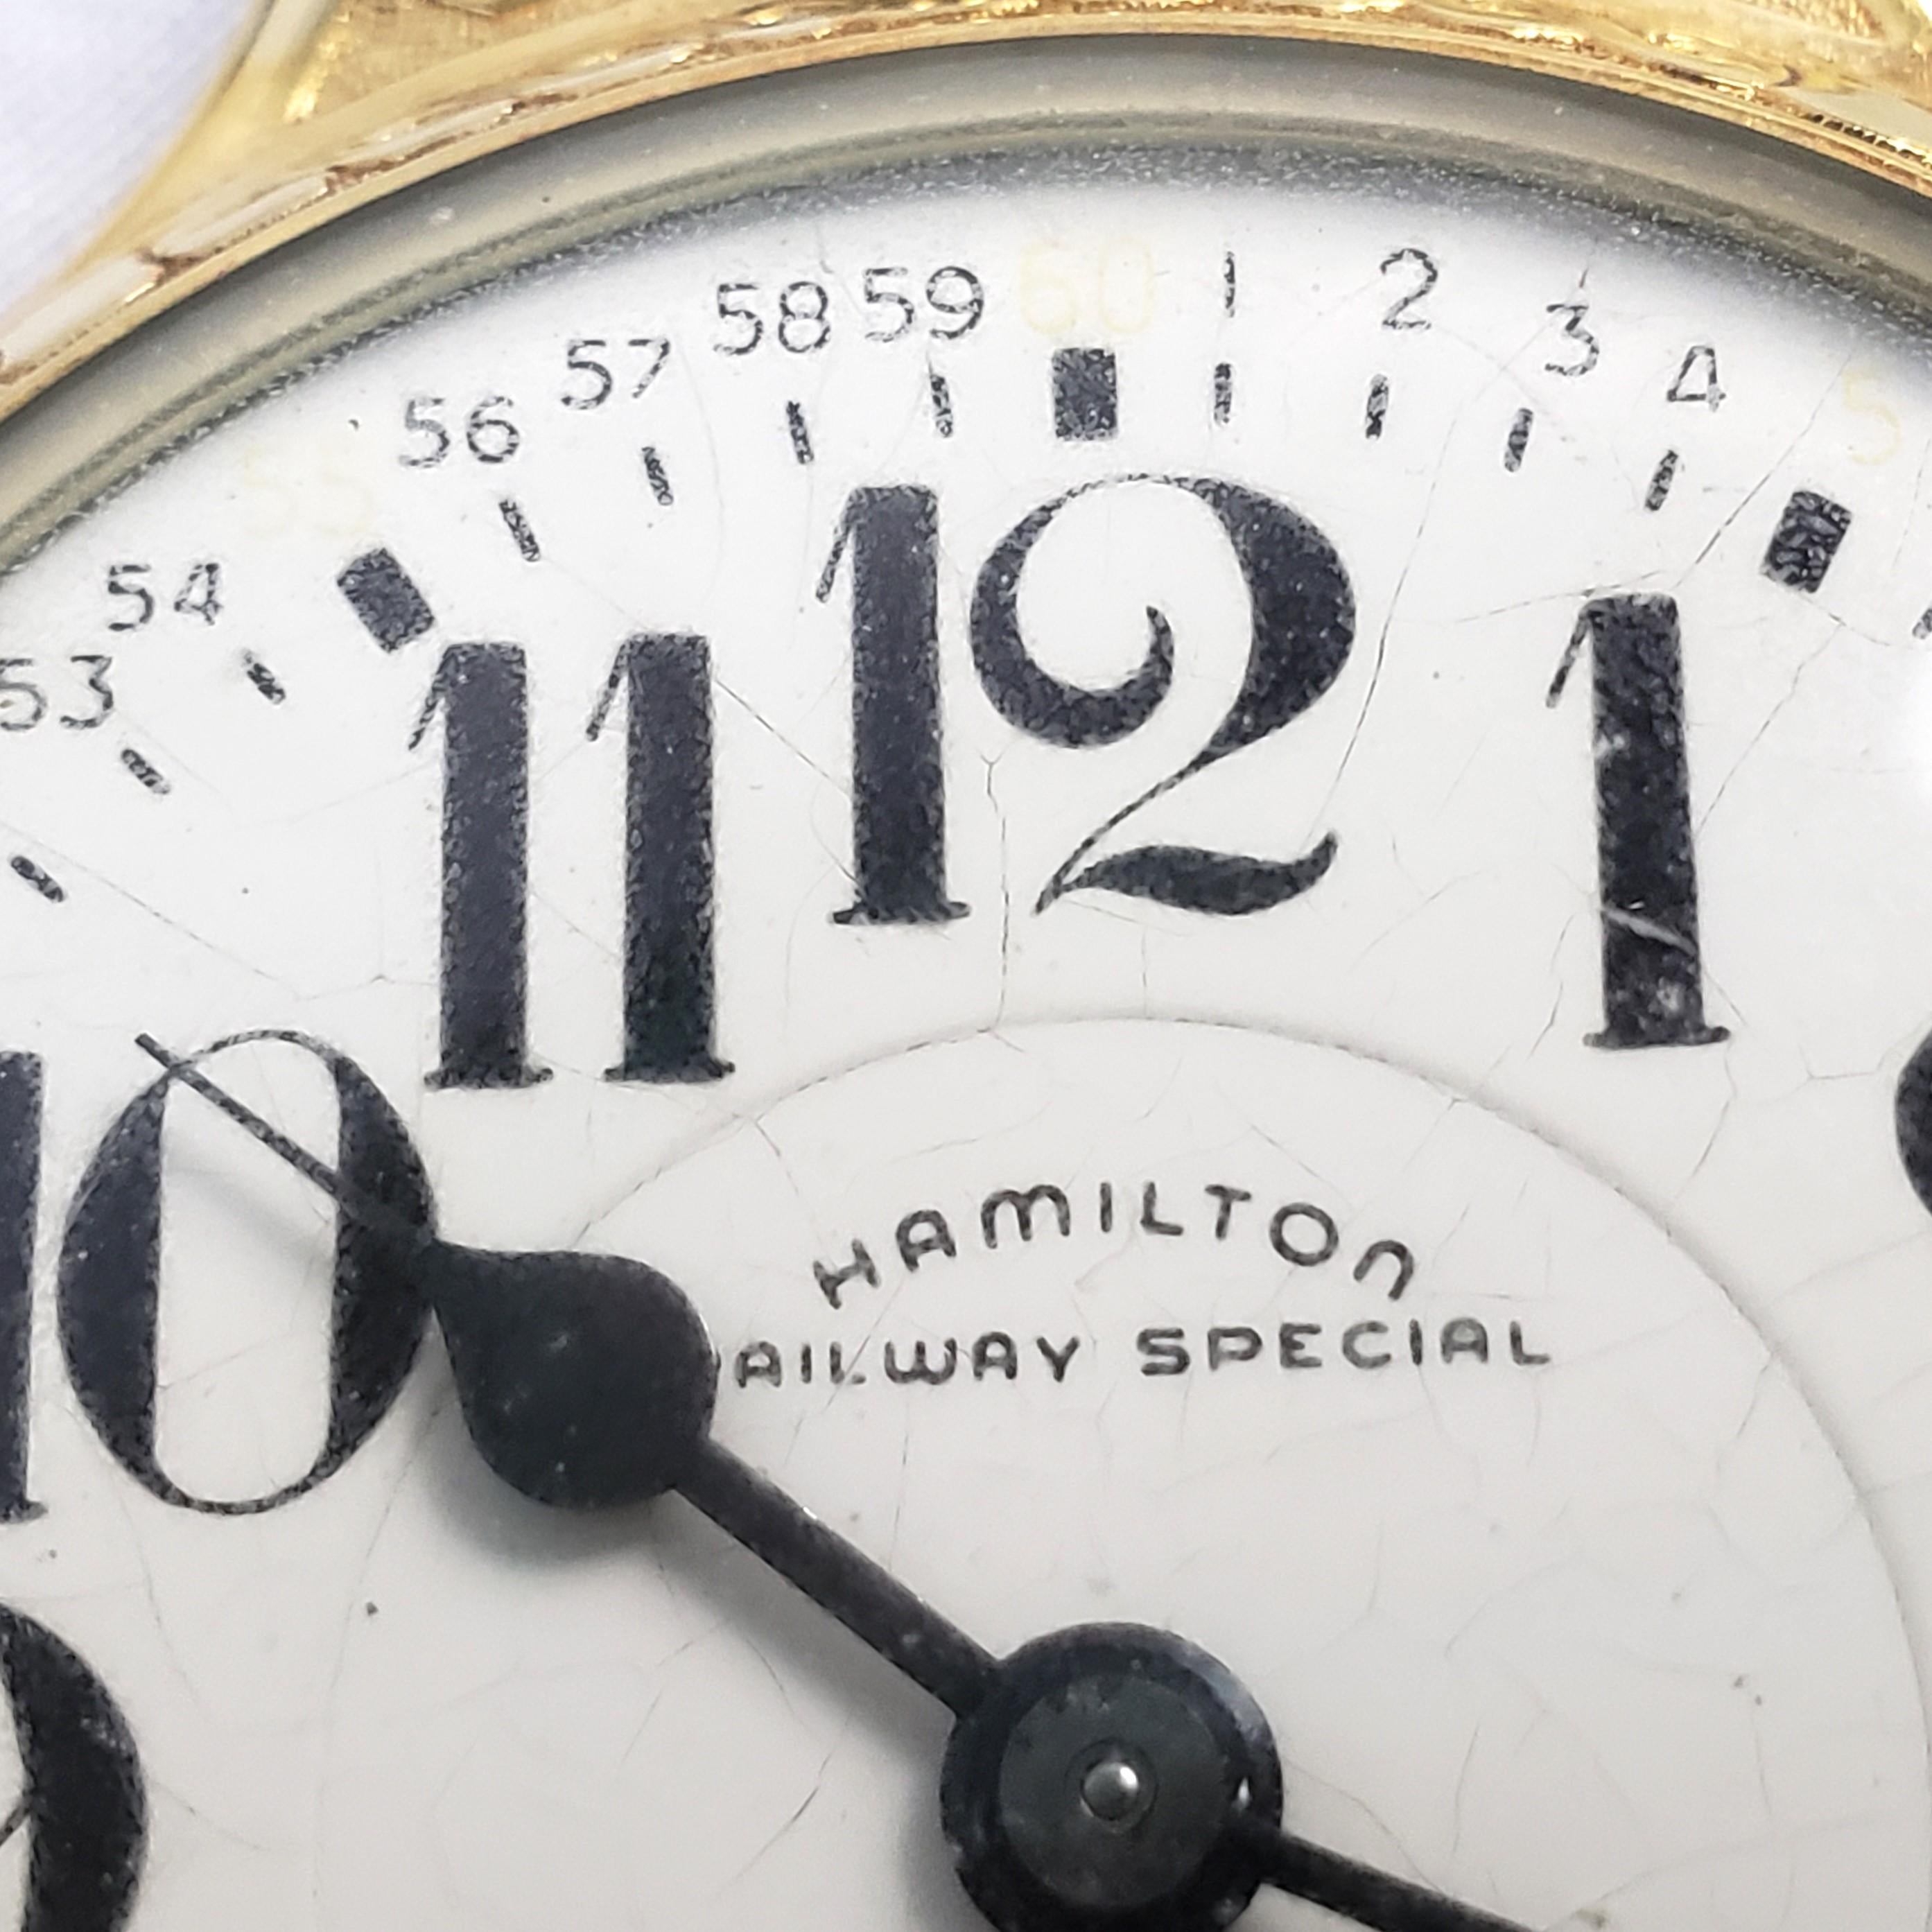 hamilton railway special pocket watch